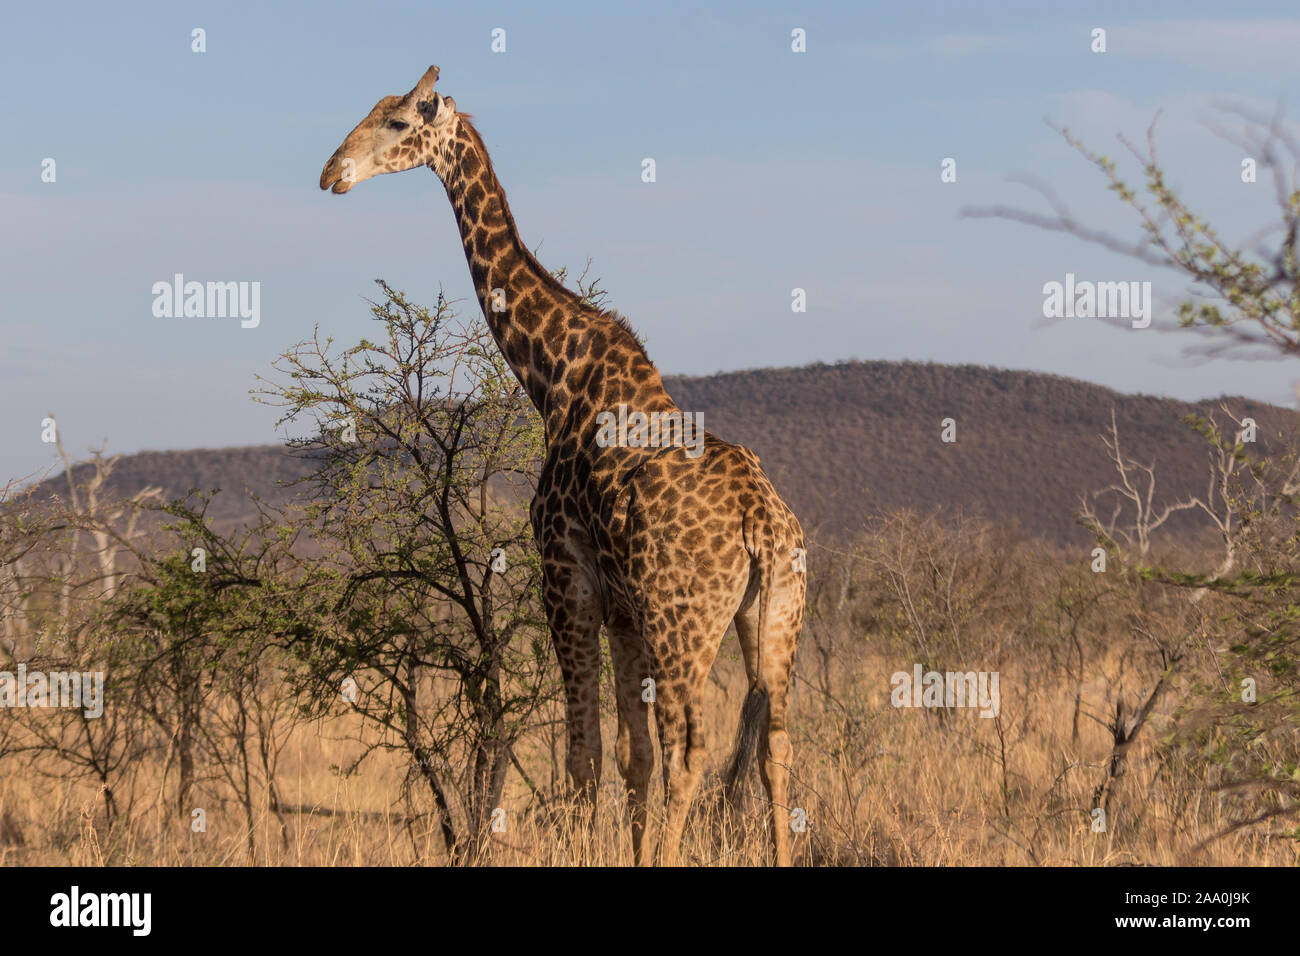 Giraffe on safari Stock Photo